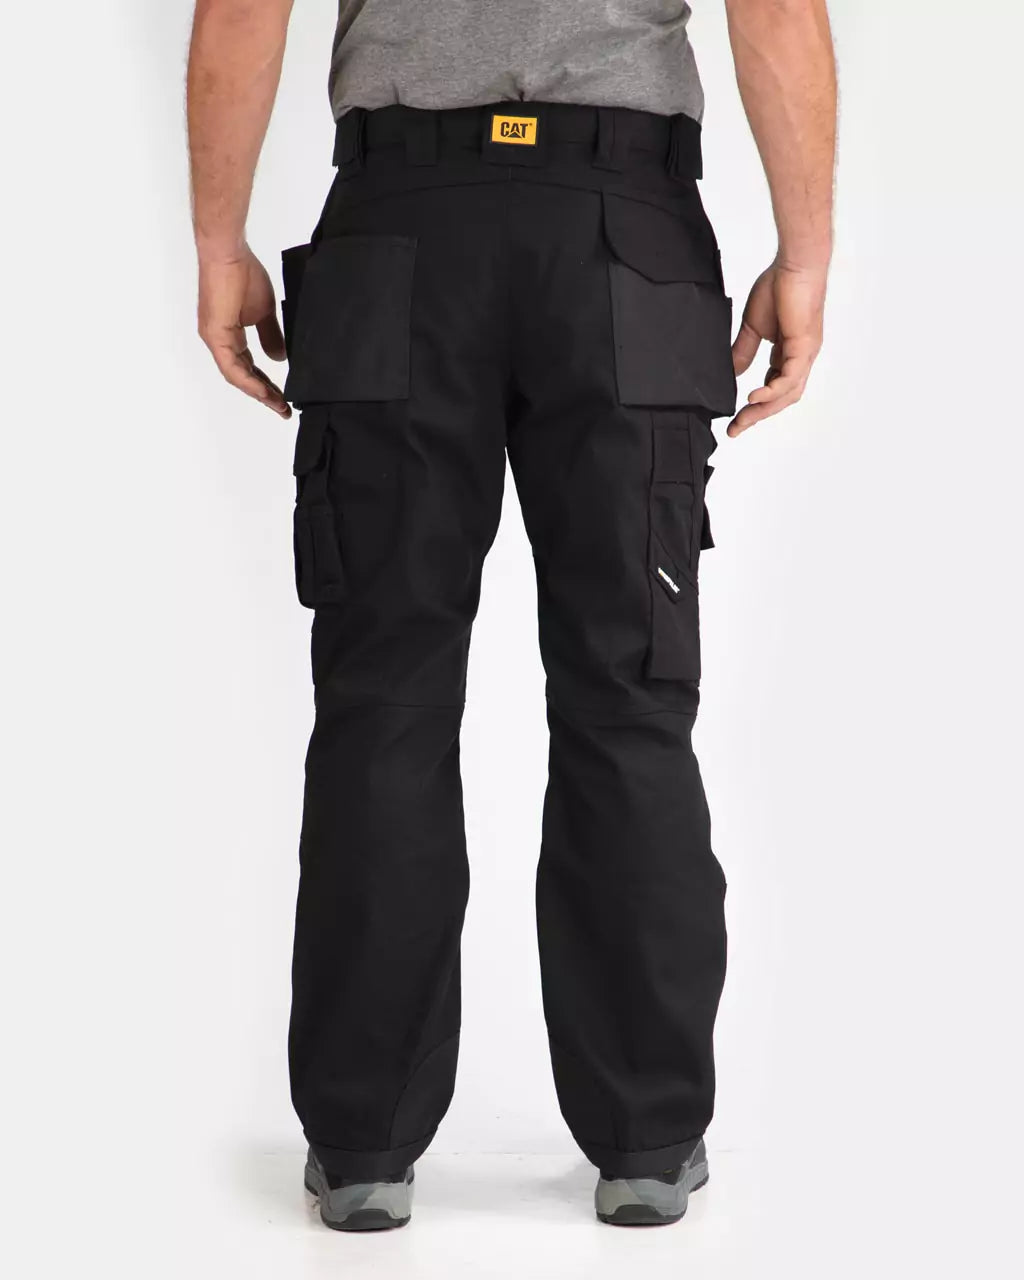 cat workwear men trademark trouser black c172 16 b dup2